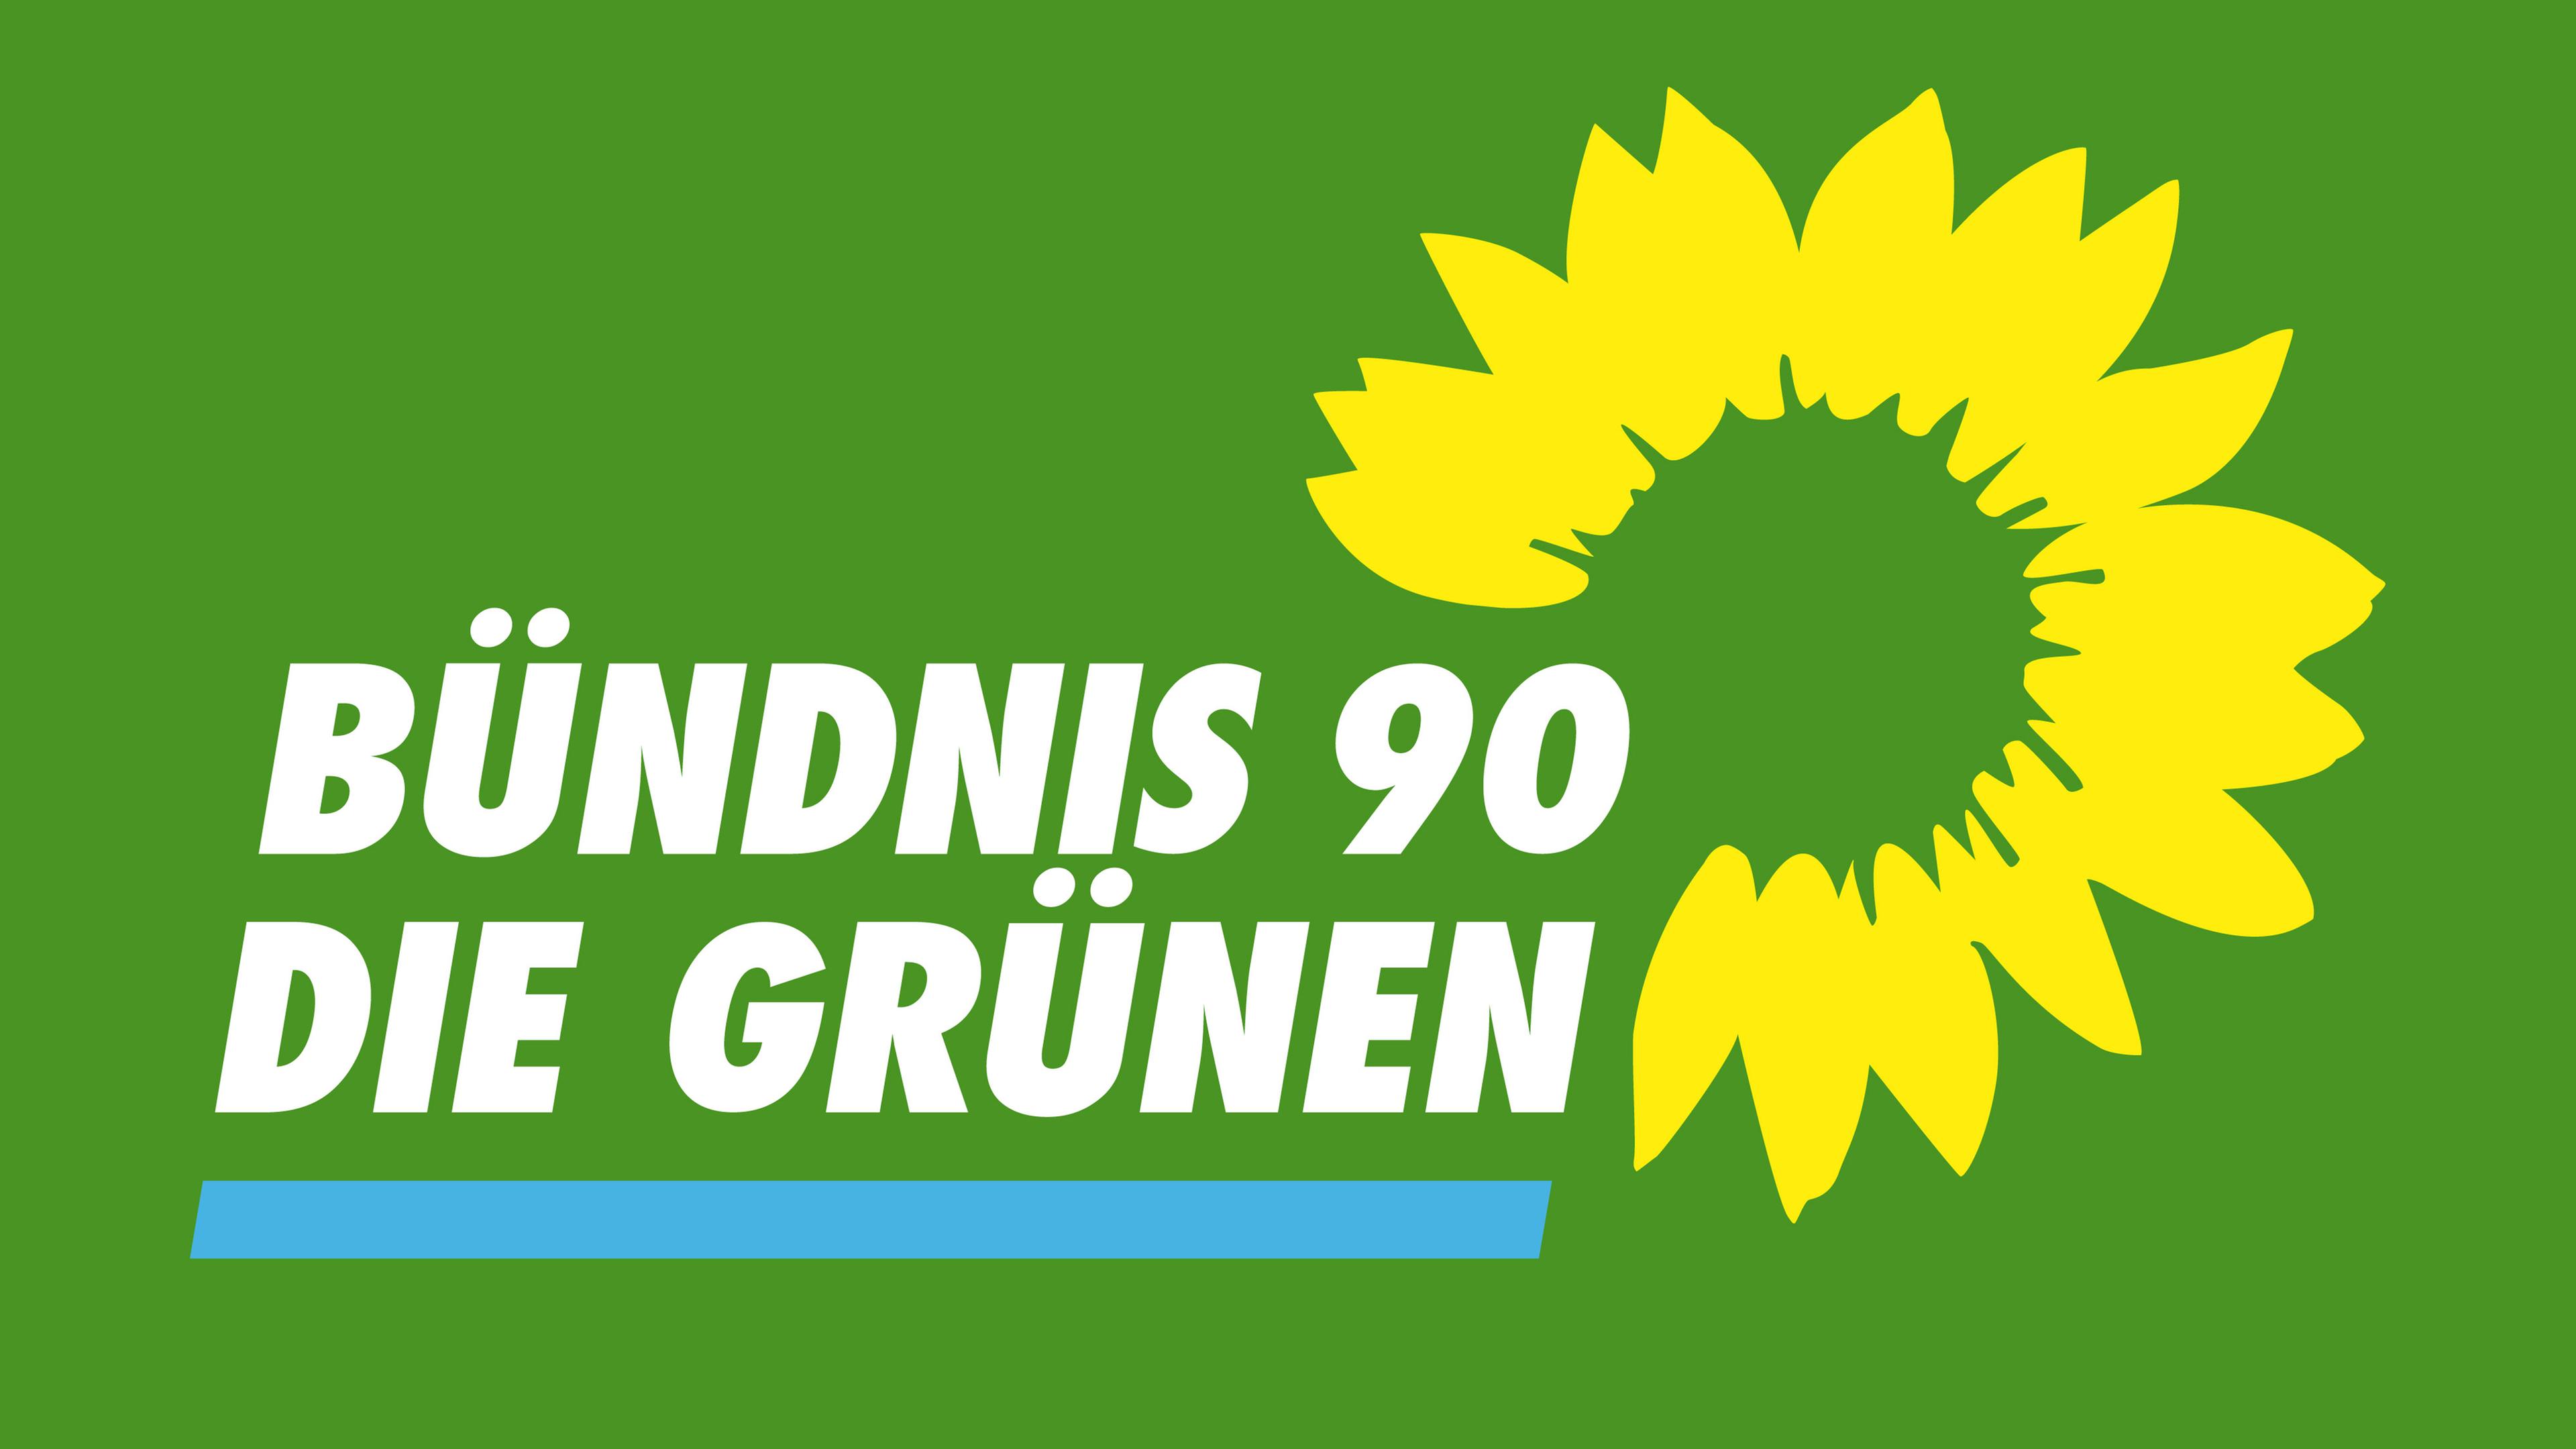 Bündnis 90 die Grünen logo